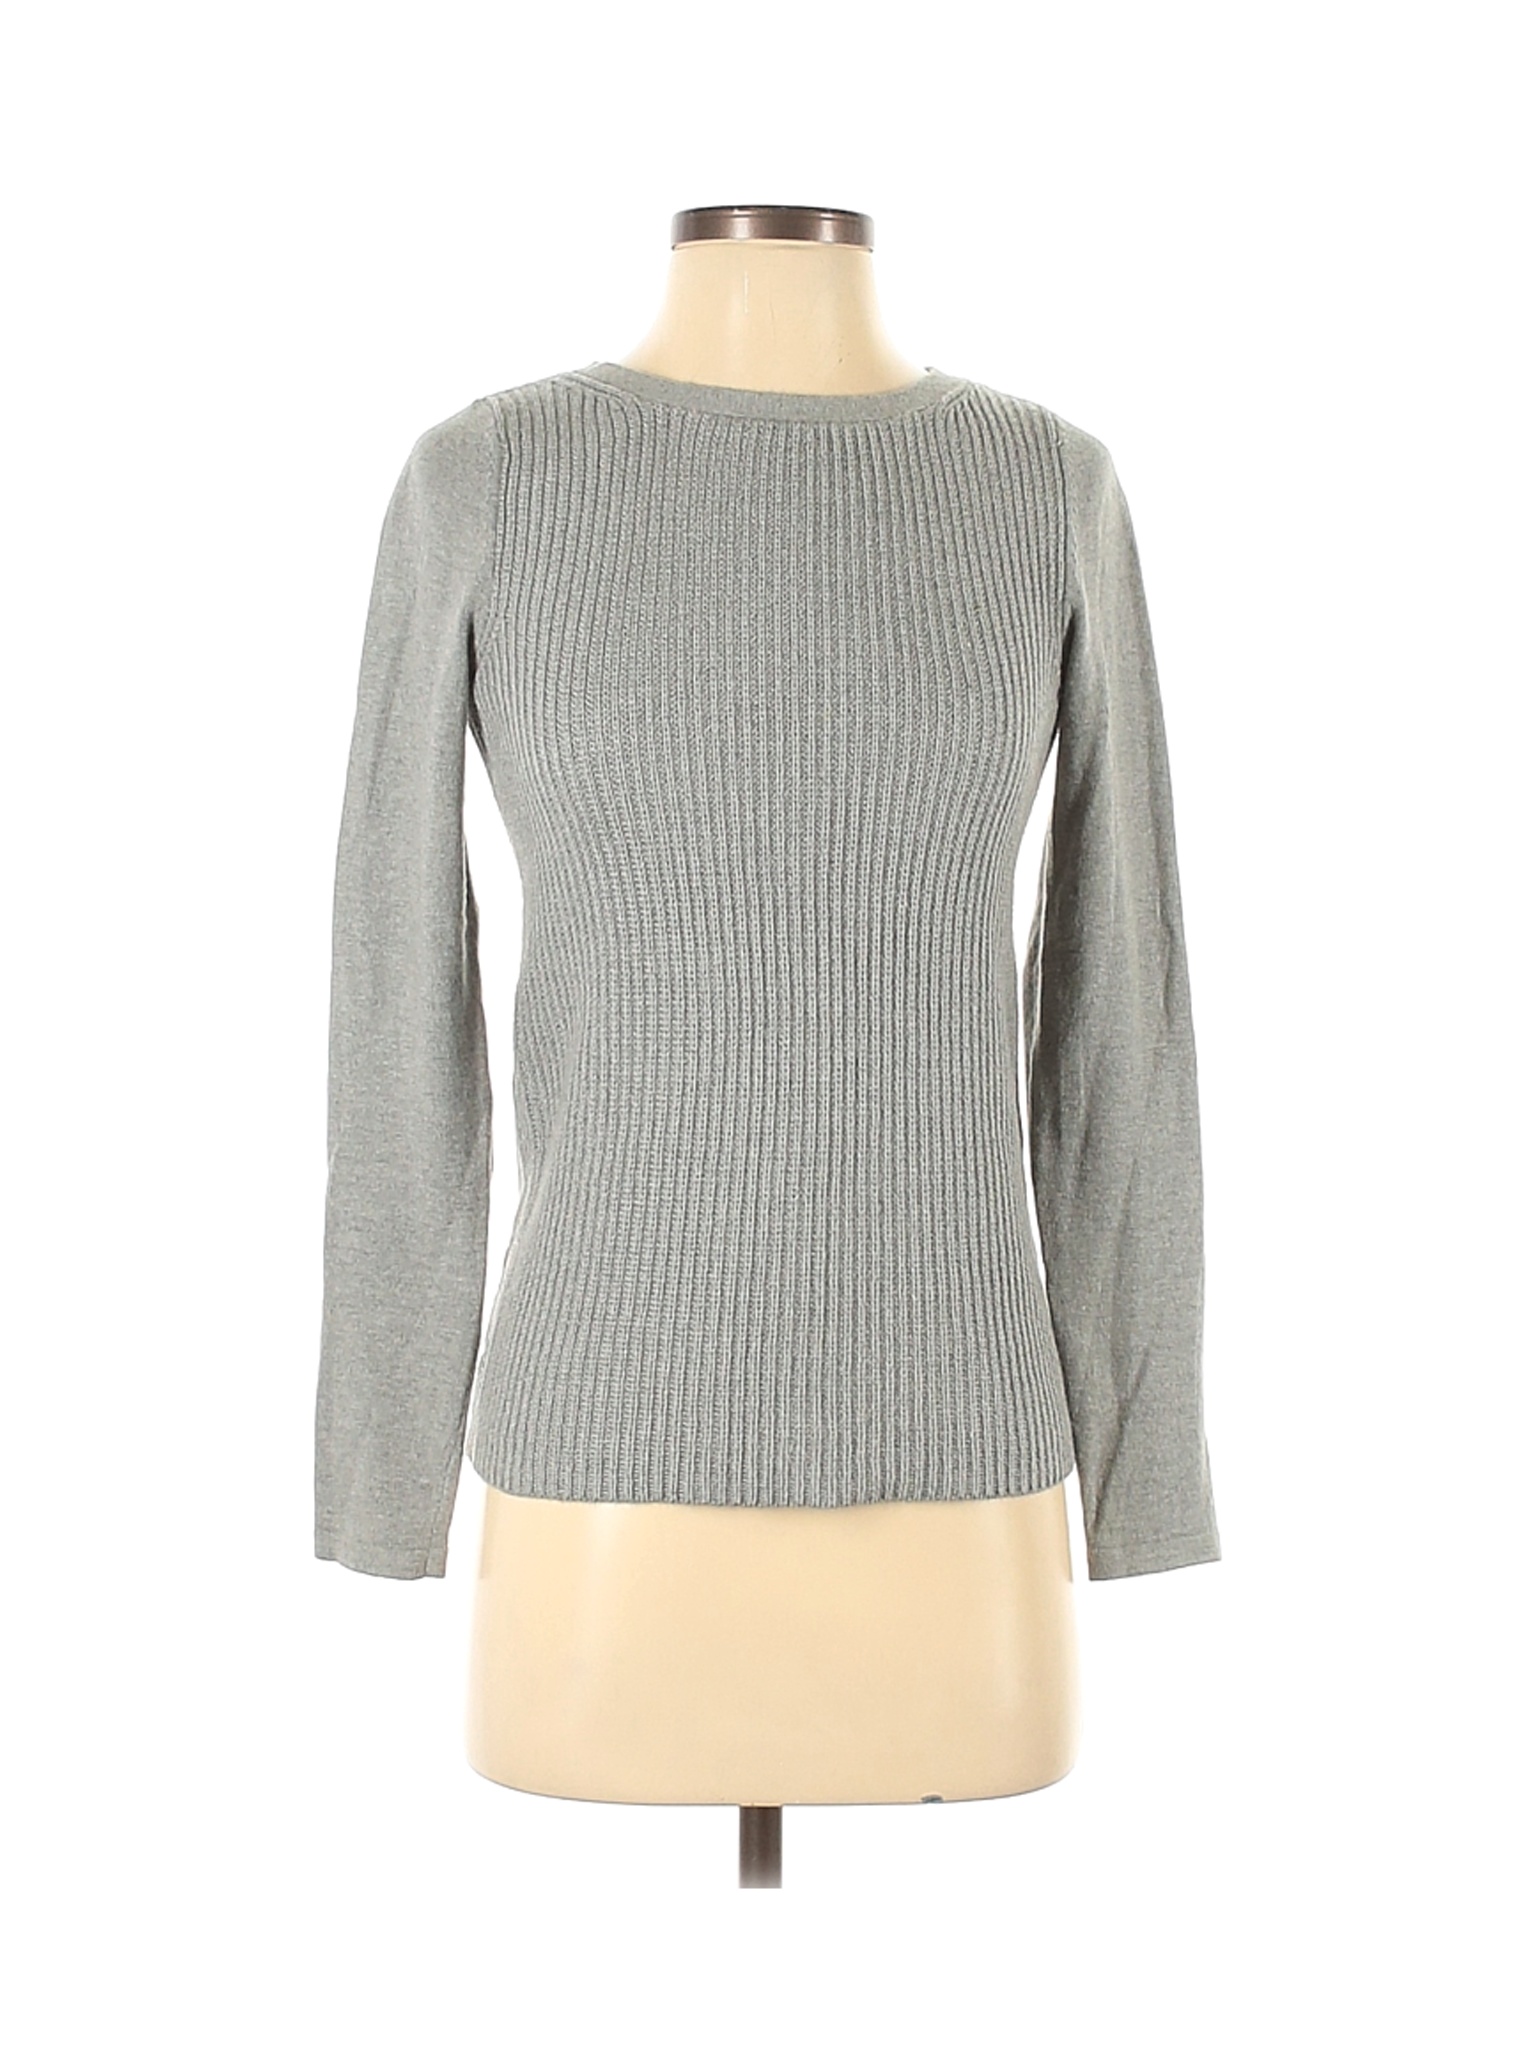 Banana Republic Women Gray Pullover Sweater XS | eBay